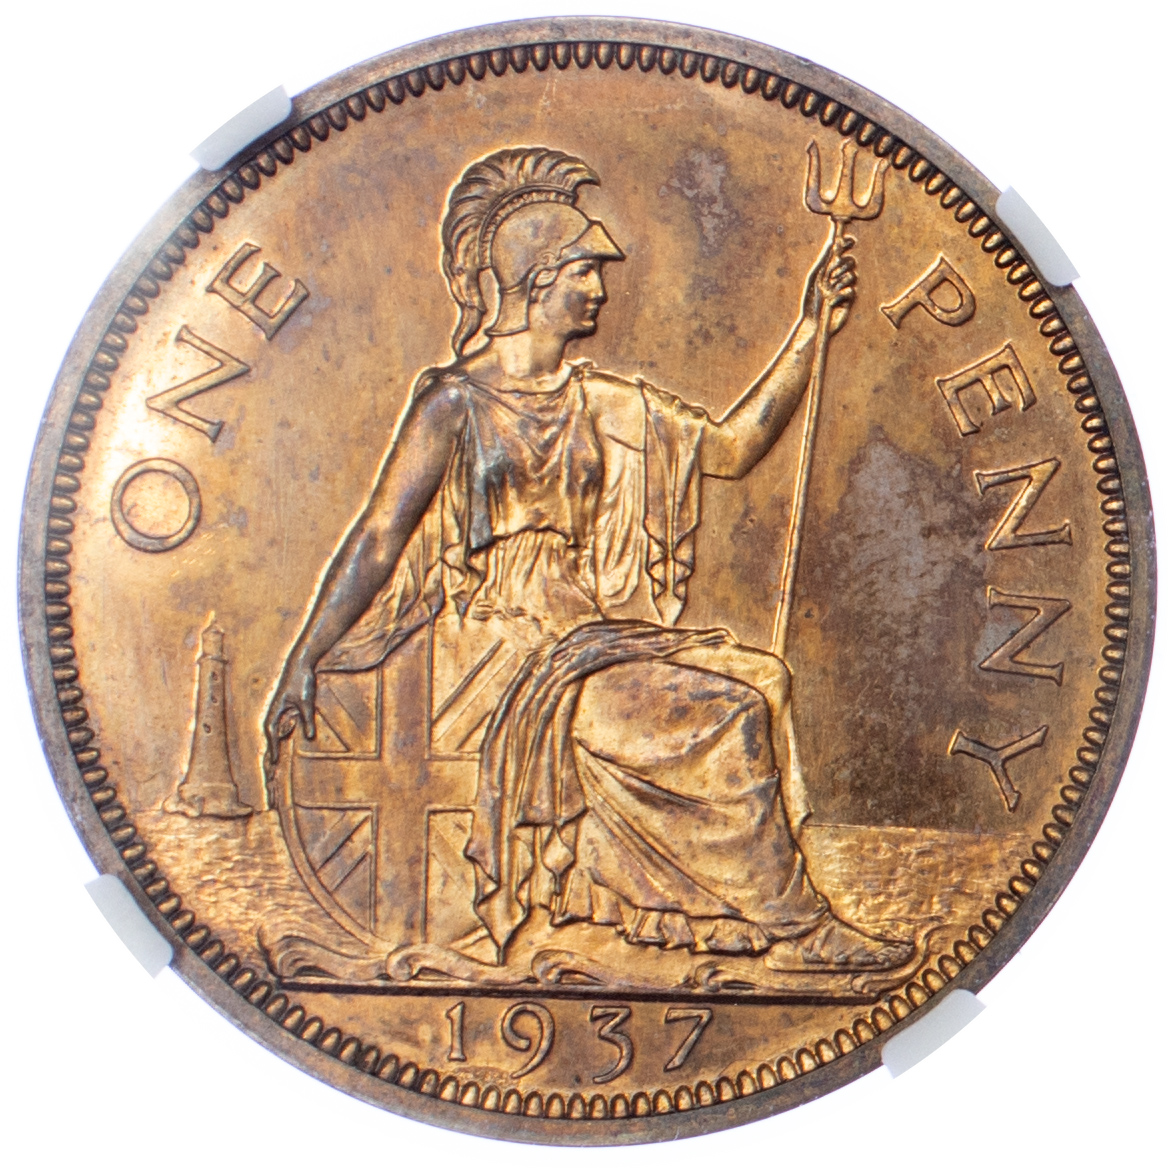 Coin 1937 King Edward VIII of England spouse Wallis Simpson =replica= 